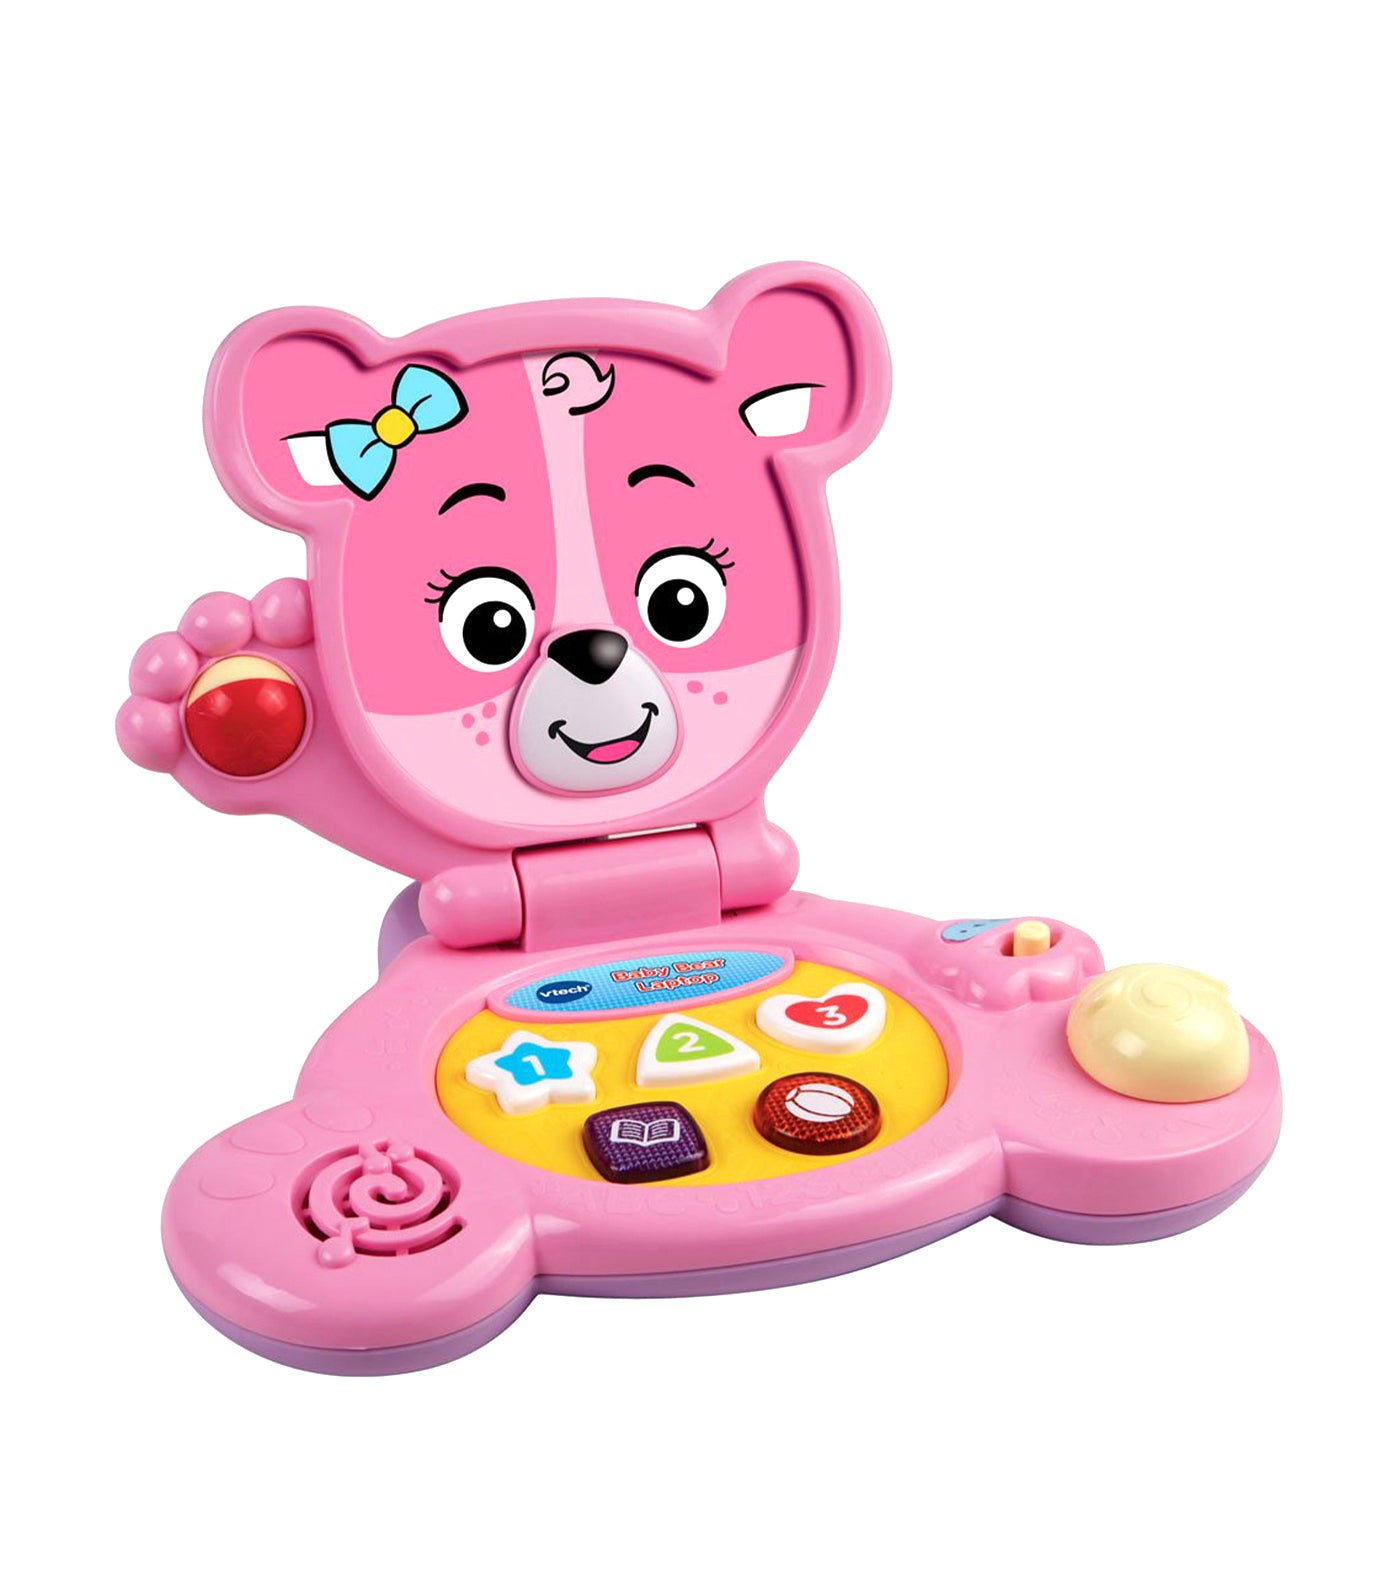 vtech baby bear laptop - pink